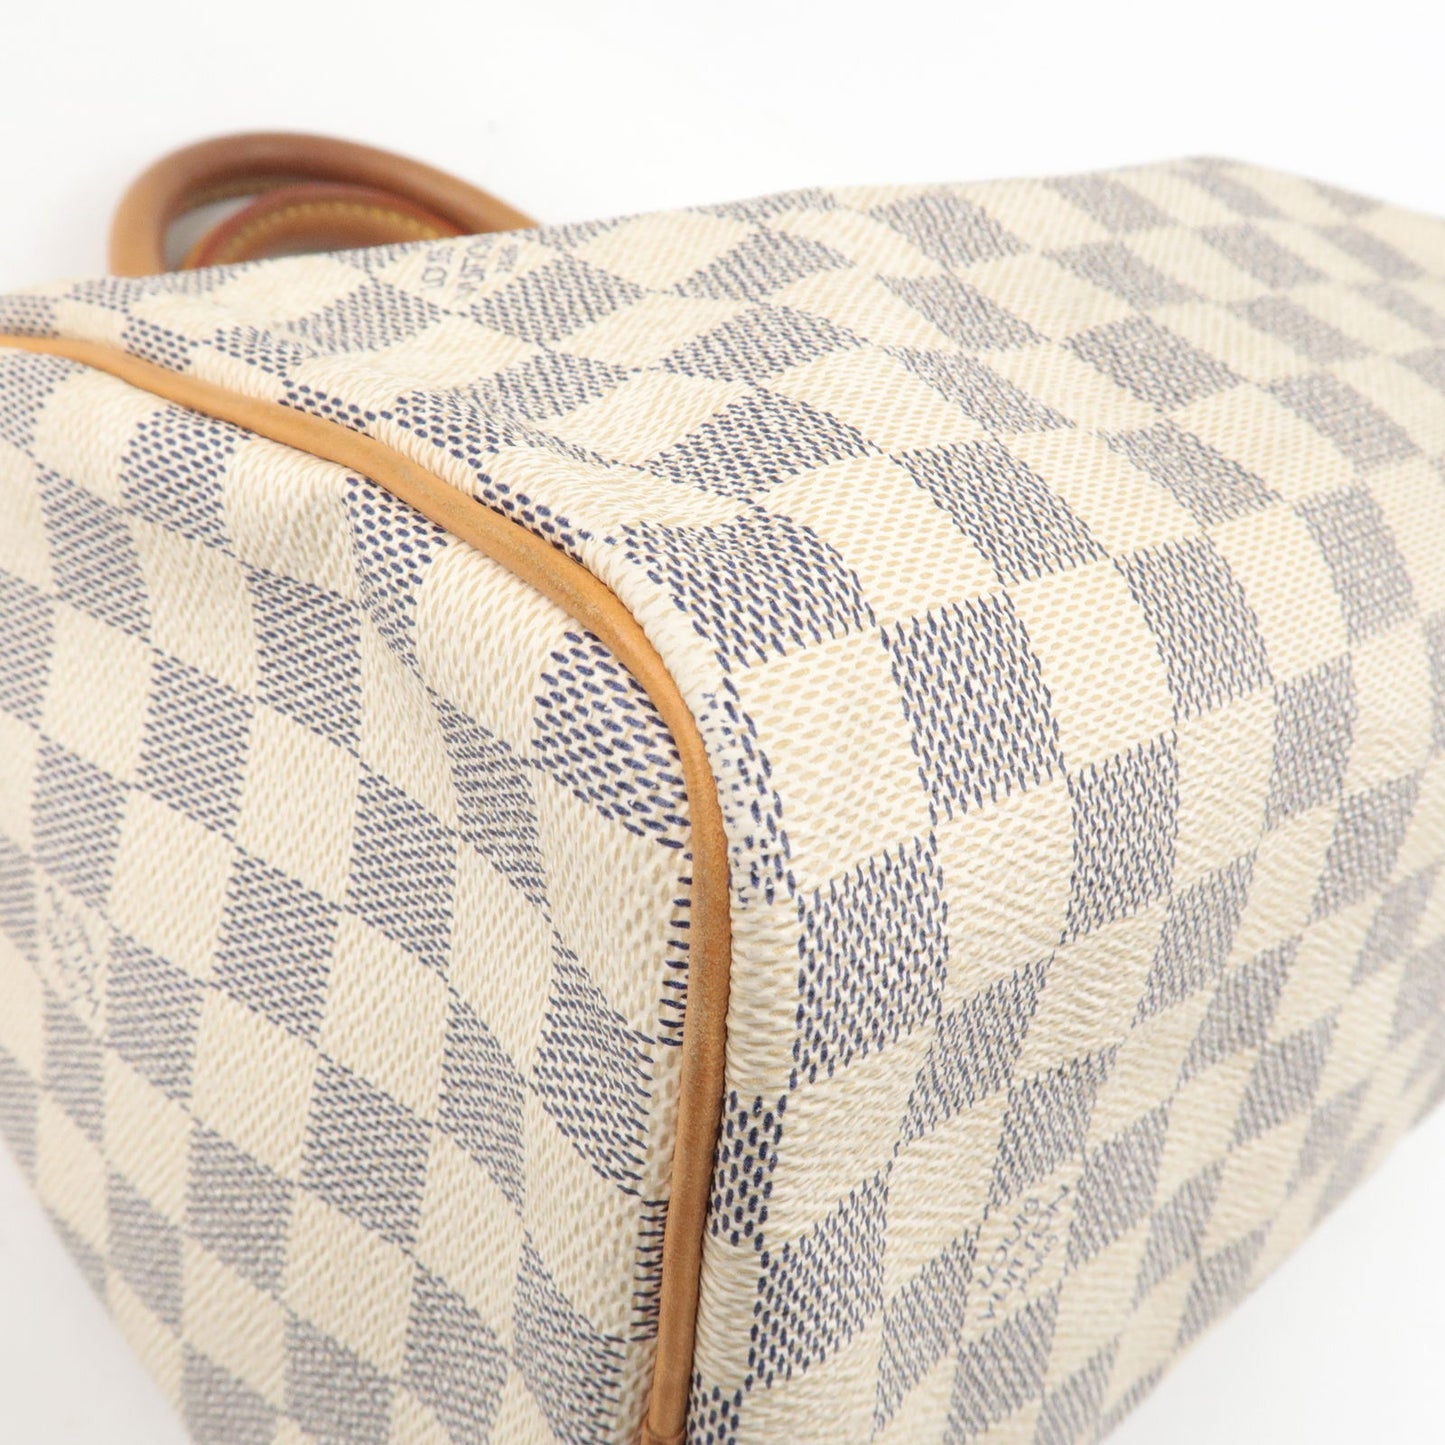 Louis Vuitton Damier Azur Speedy 25 Hand Bag Boston Bag N41534